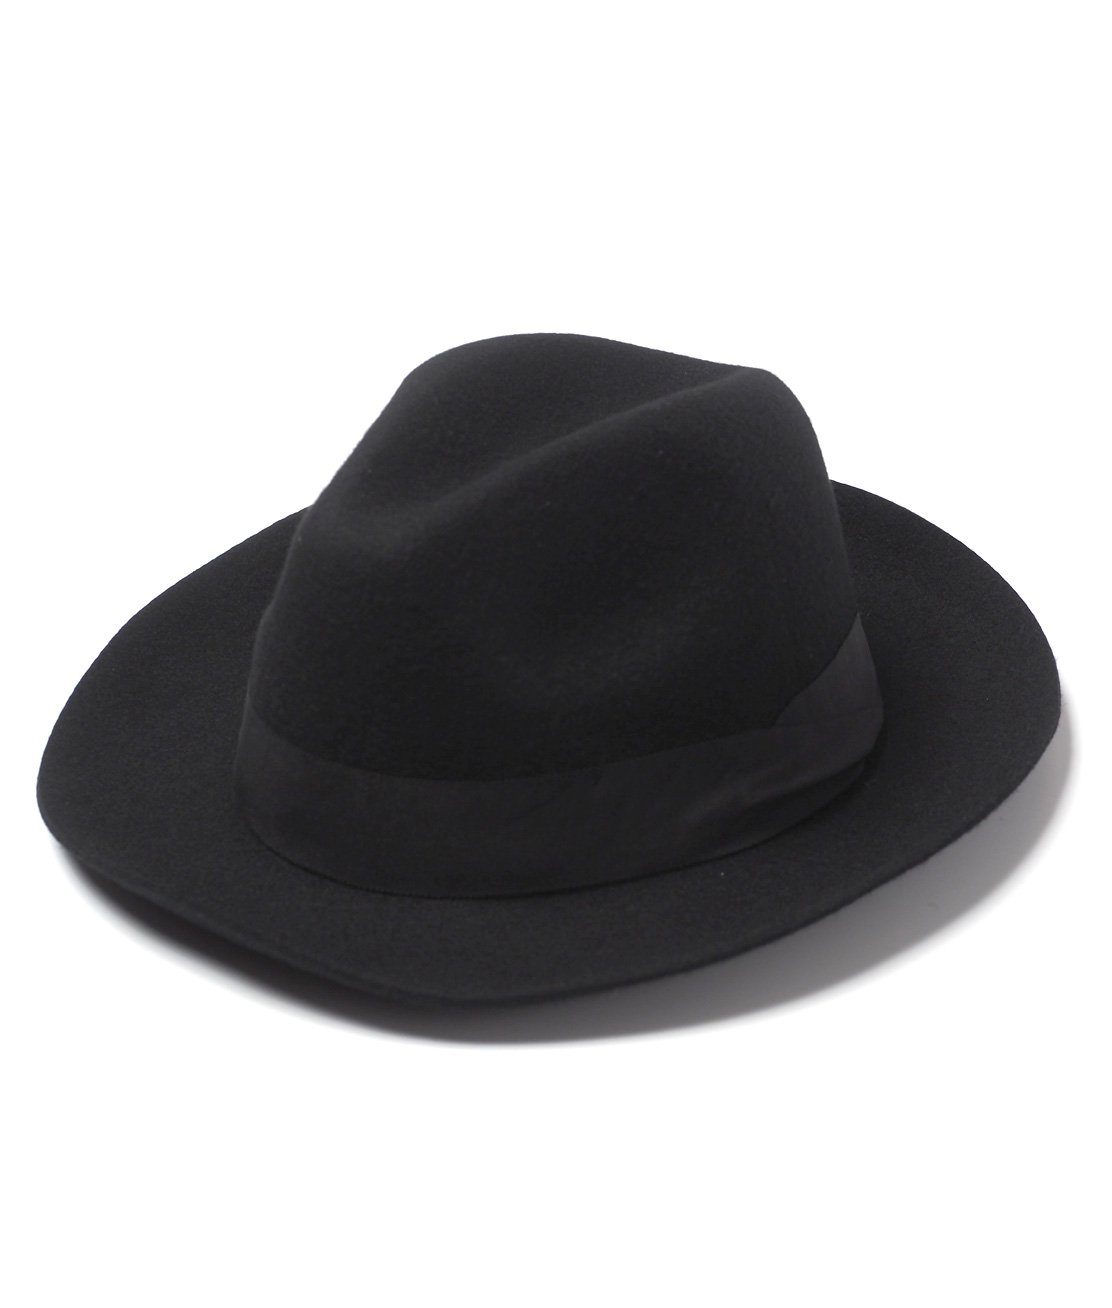 【Ralph Lauren】BEDFORD FEDORA HAT - BLACK フェドラ フェルトハット 中折れ帽 並行輸入品 - HUNKY  DORY | LEVI'S VINTAGE CLOTHING、JACKMAN、CHAMPIONなどのブランドを主に扱うセレクトショップ 通販